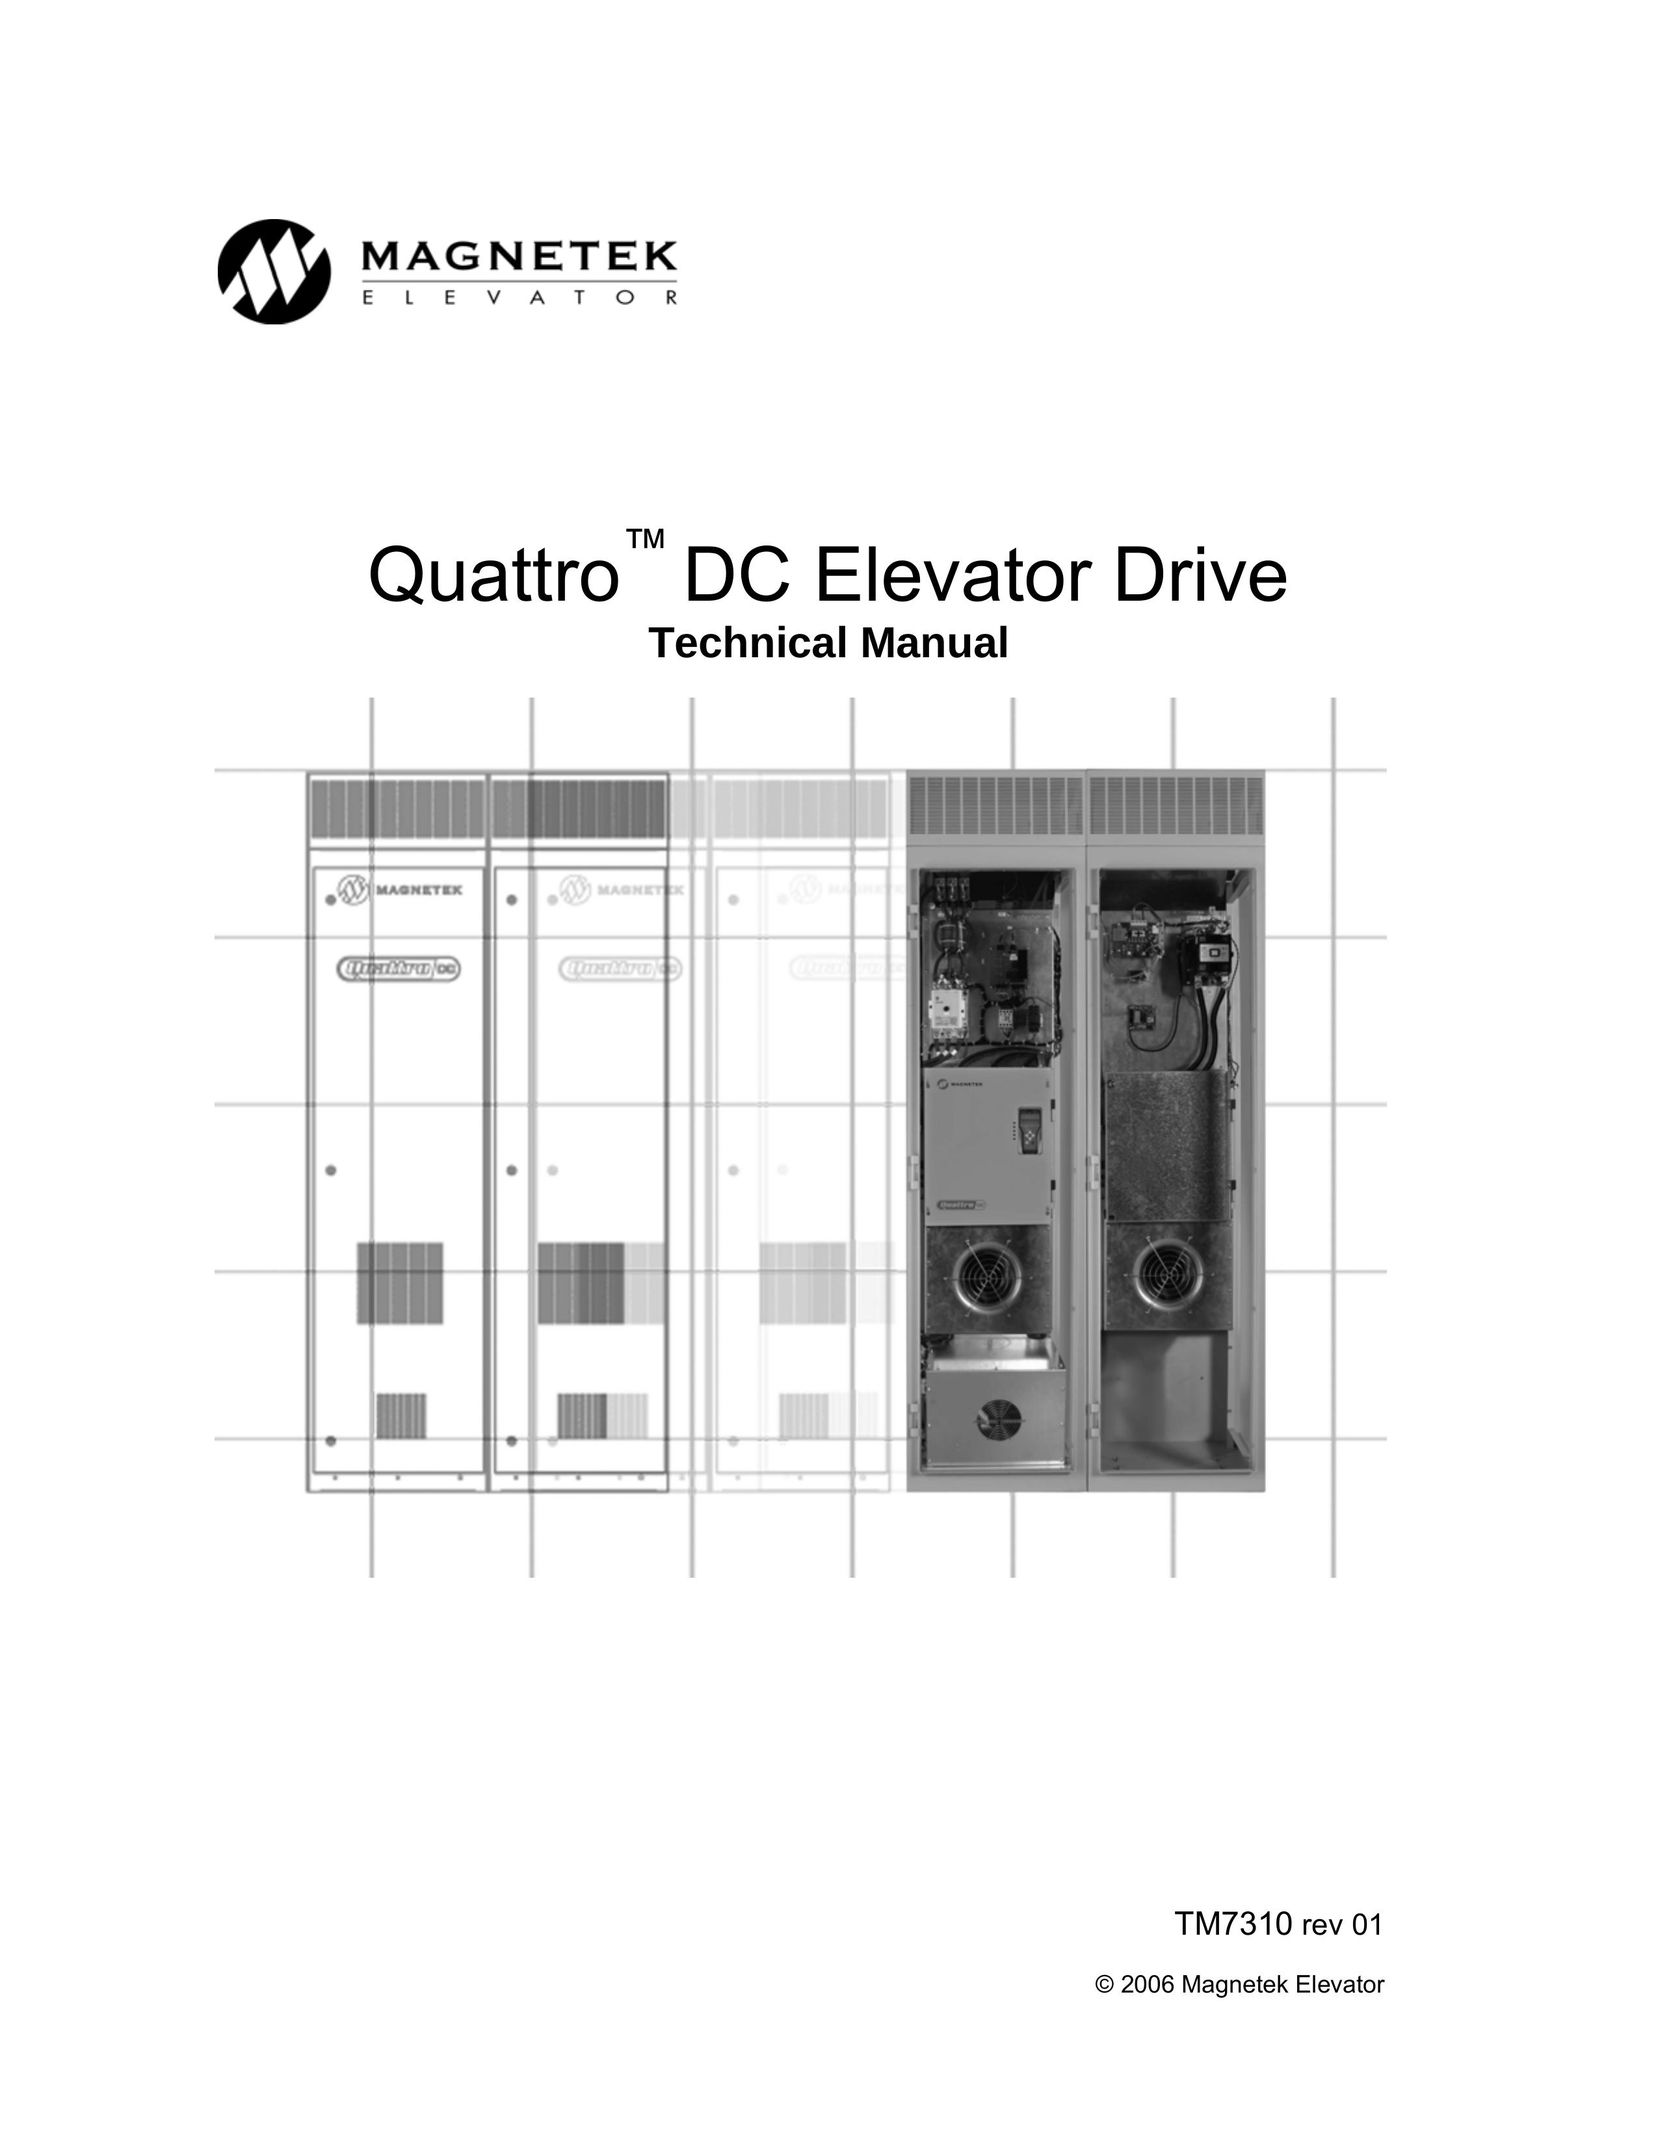 Magnetek Quattro DC Elevator Drive Computer Hardware User Manual